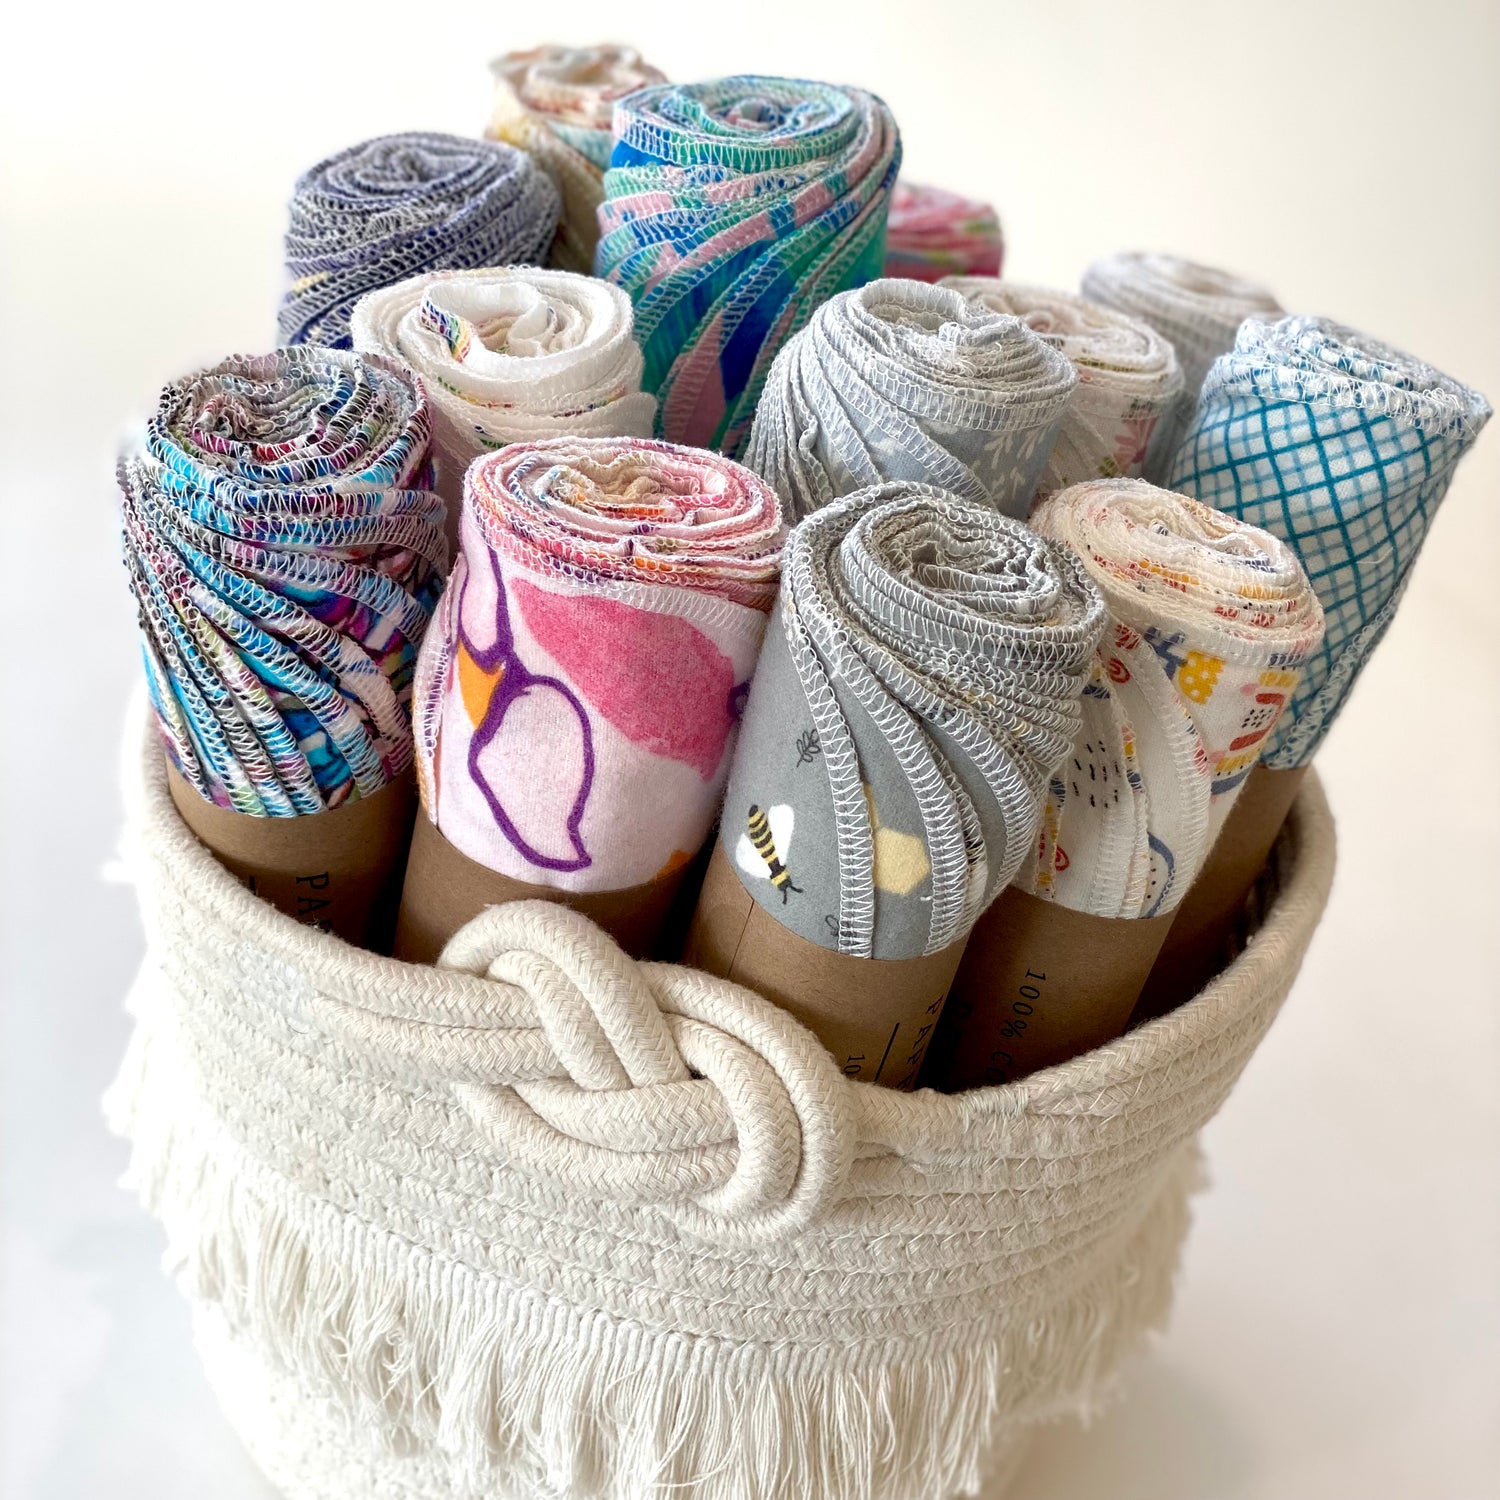 RAINBOW Paperless Towel 100% Reusable Cotton Flannel, Kitchen Hand Towel,  Home Decor